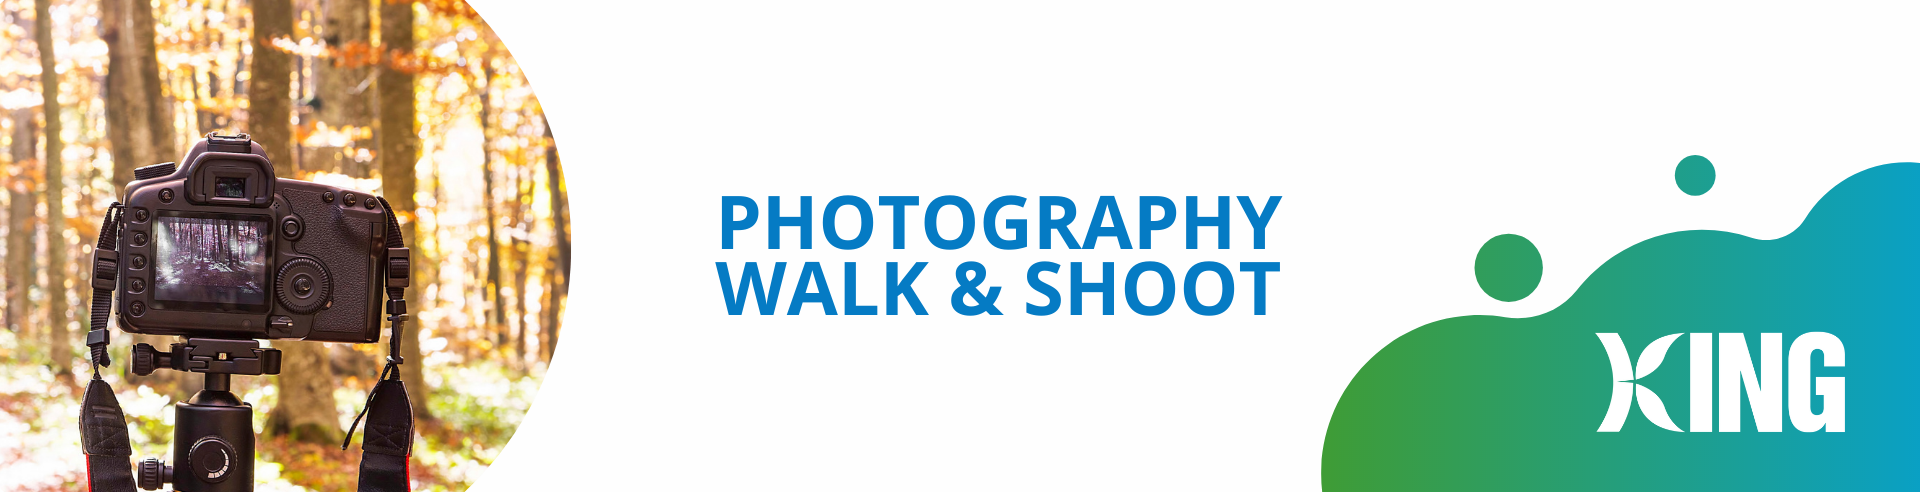 Photography Walk & Shoot Banner